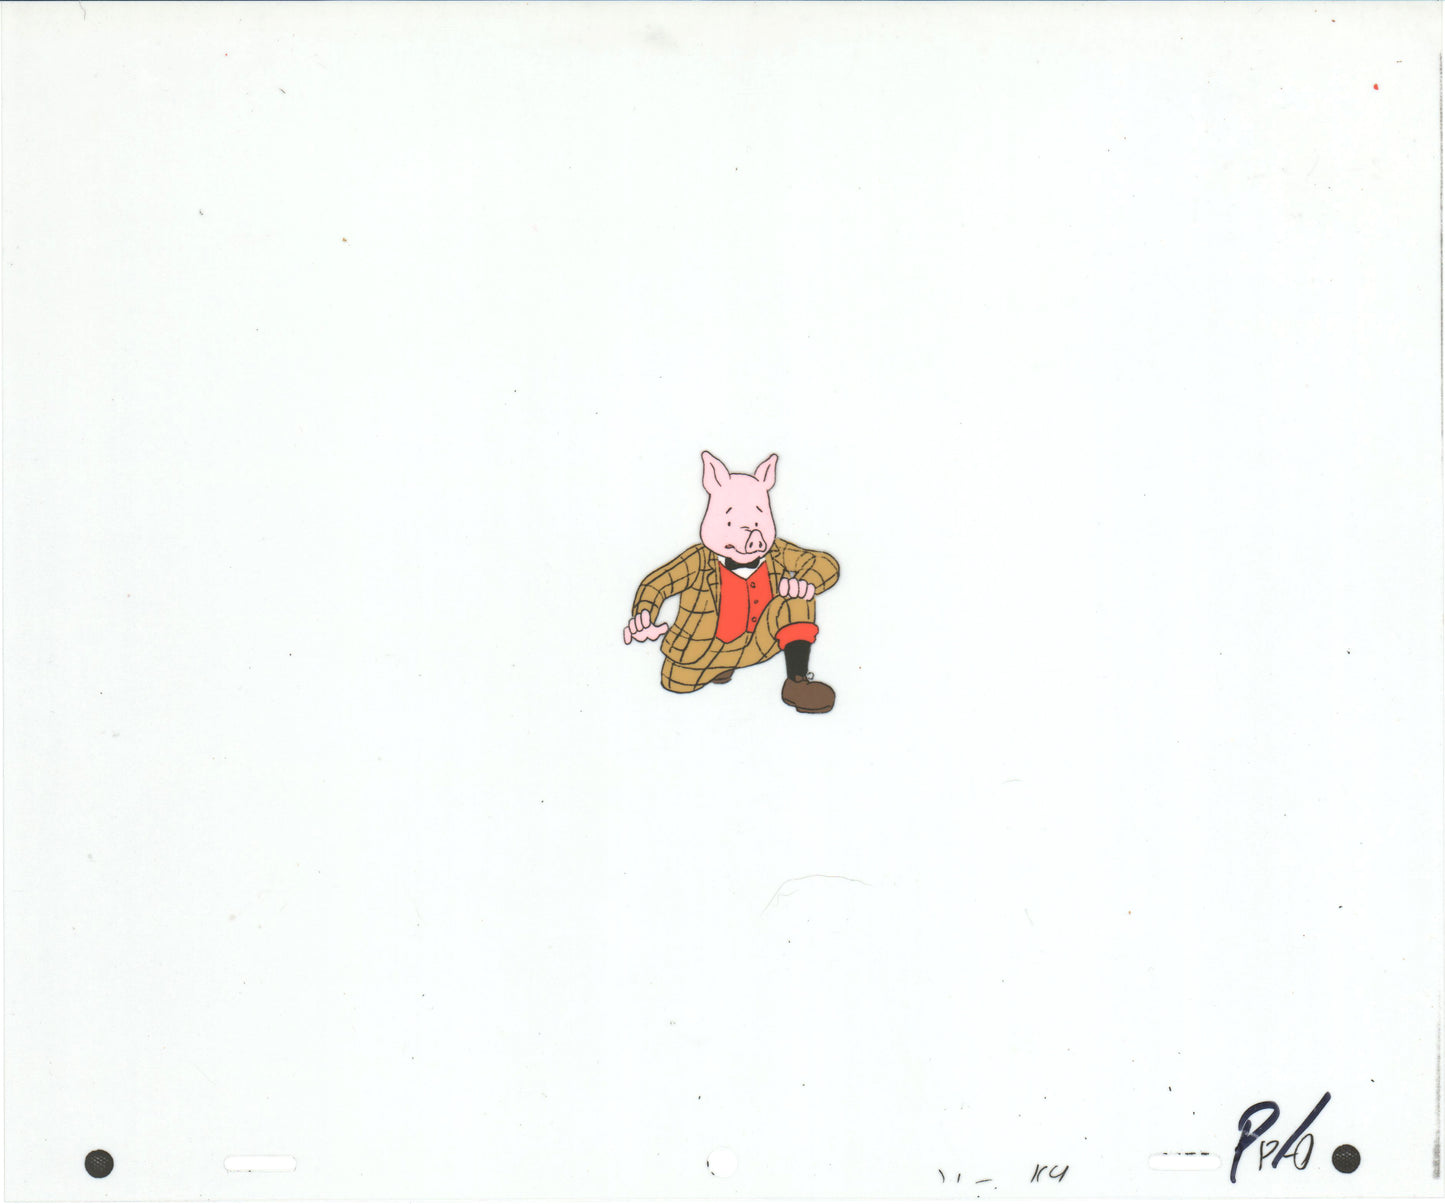 RUPERT Bear Podgy Pig Original Production Animation Cel from the Cartoon by Nelvana Tourtel Animation 1990s 8-329